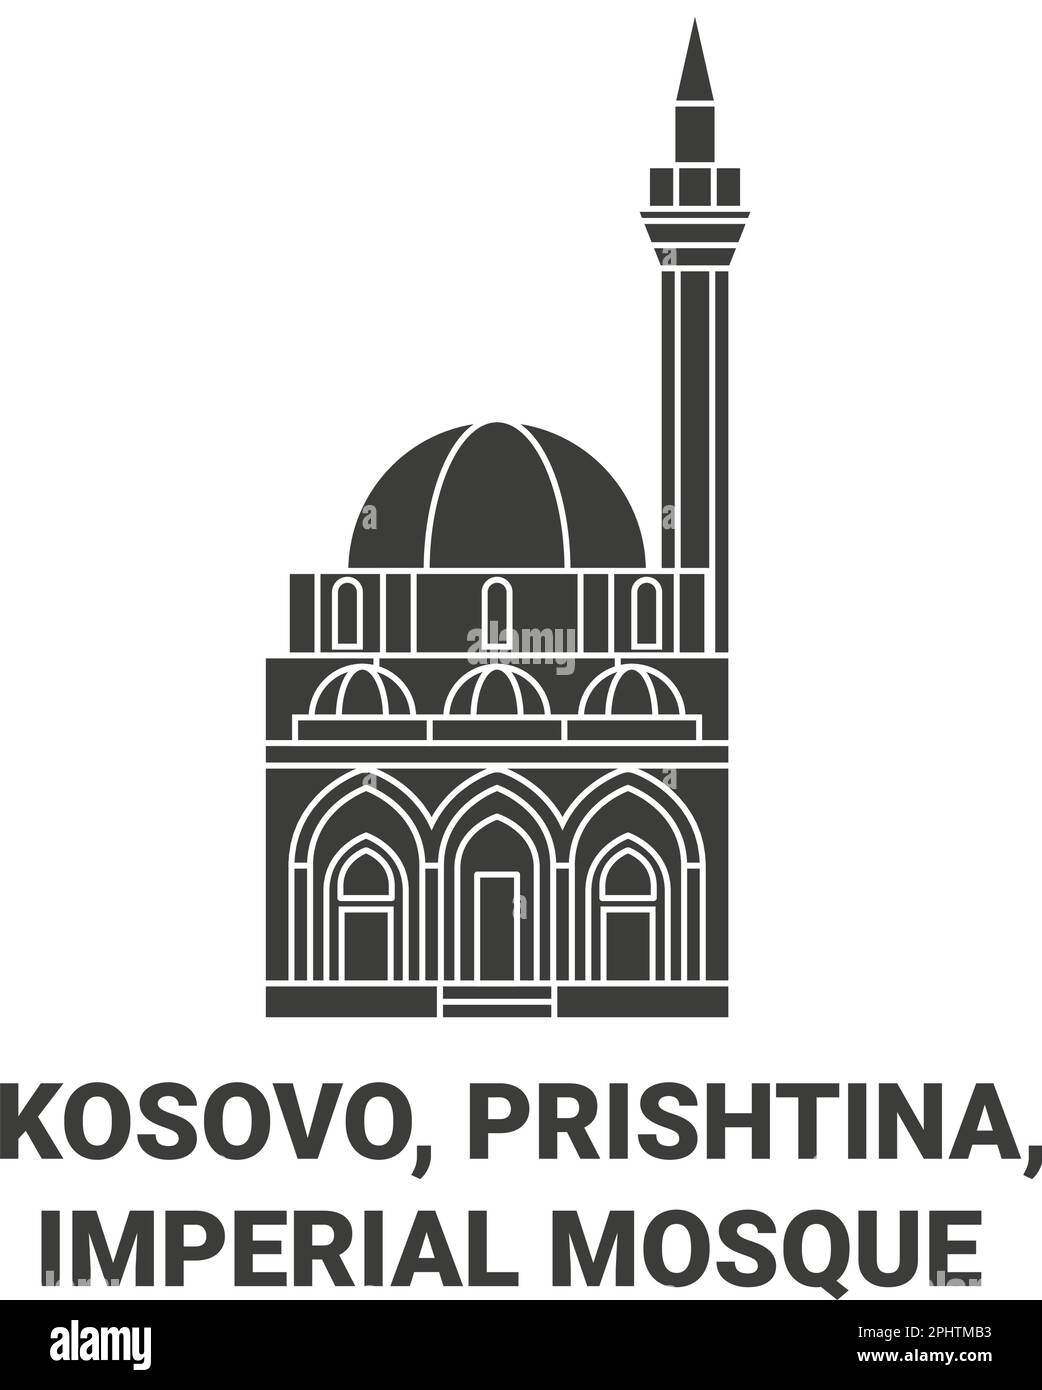 Kosovo, Prishtina, Imperial Mosque travel landmark vector illustration Stock Vector